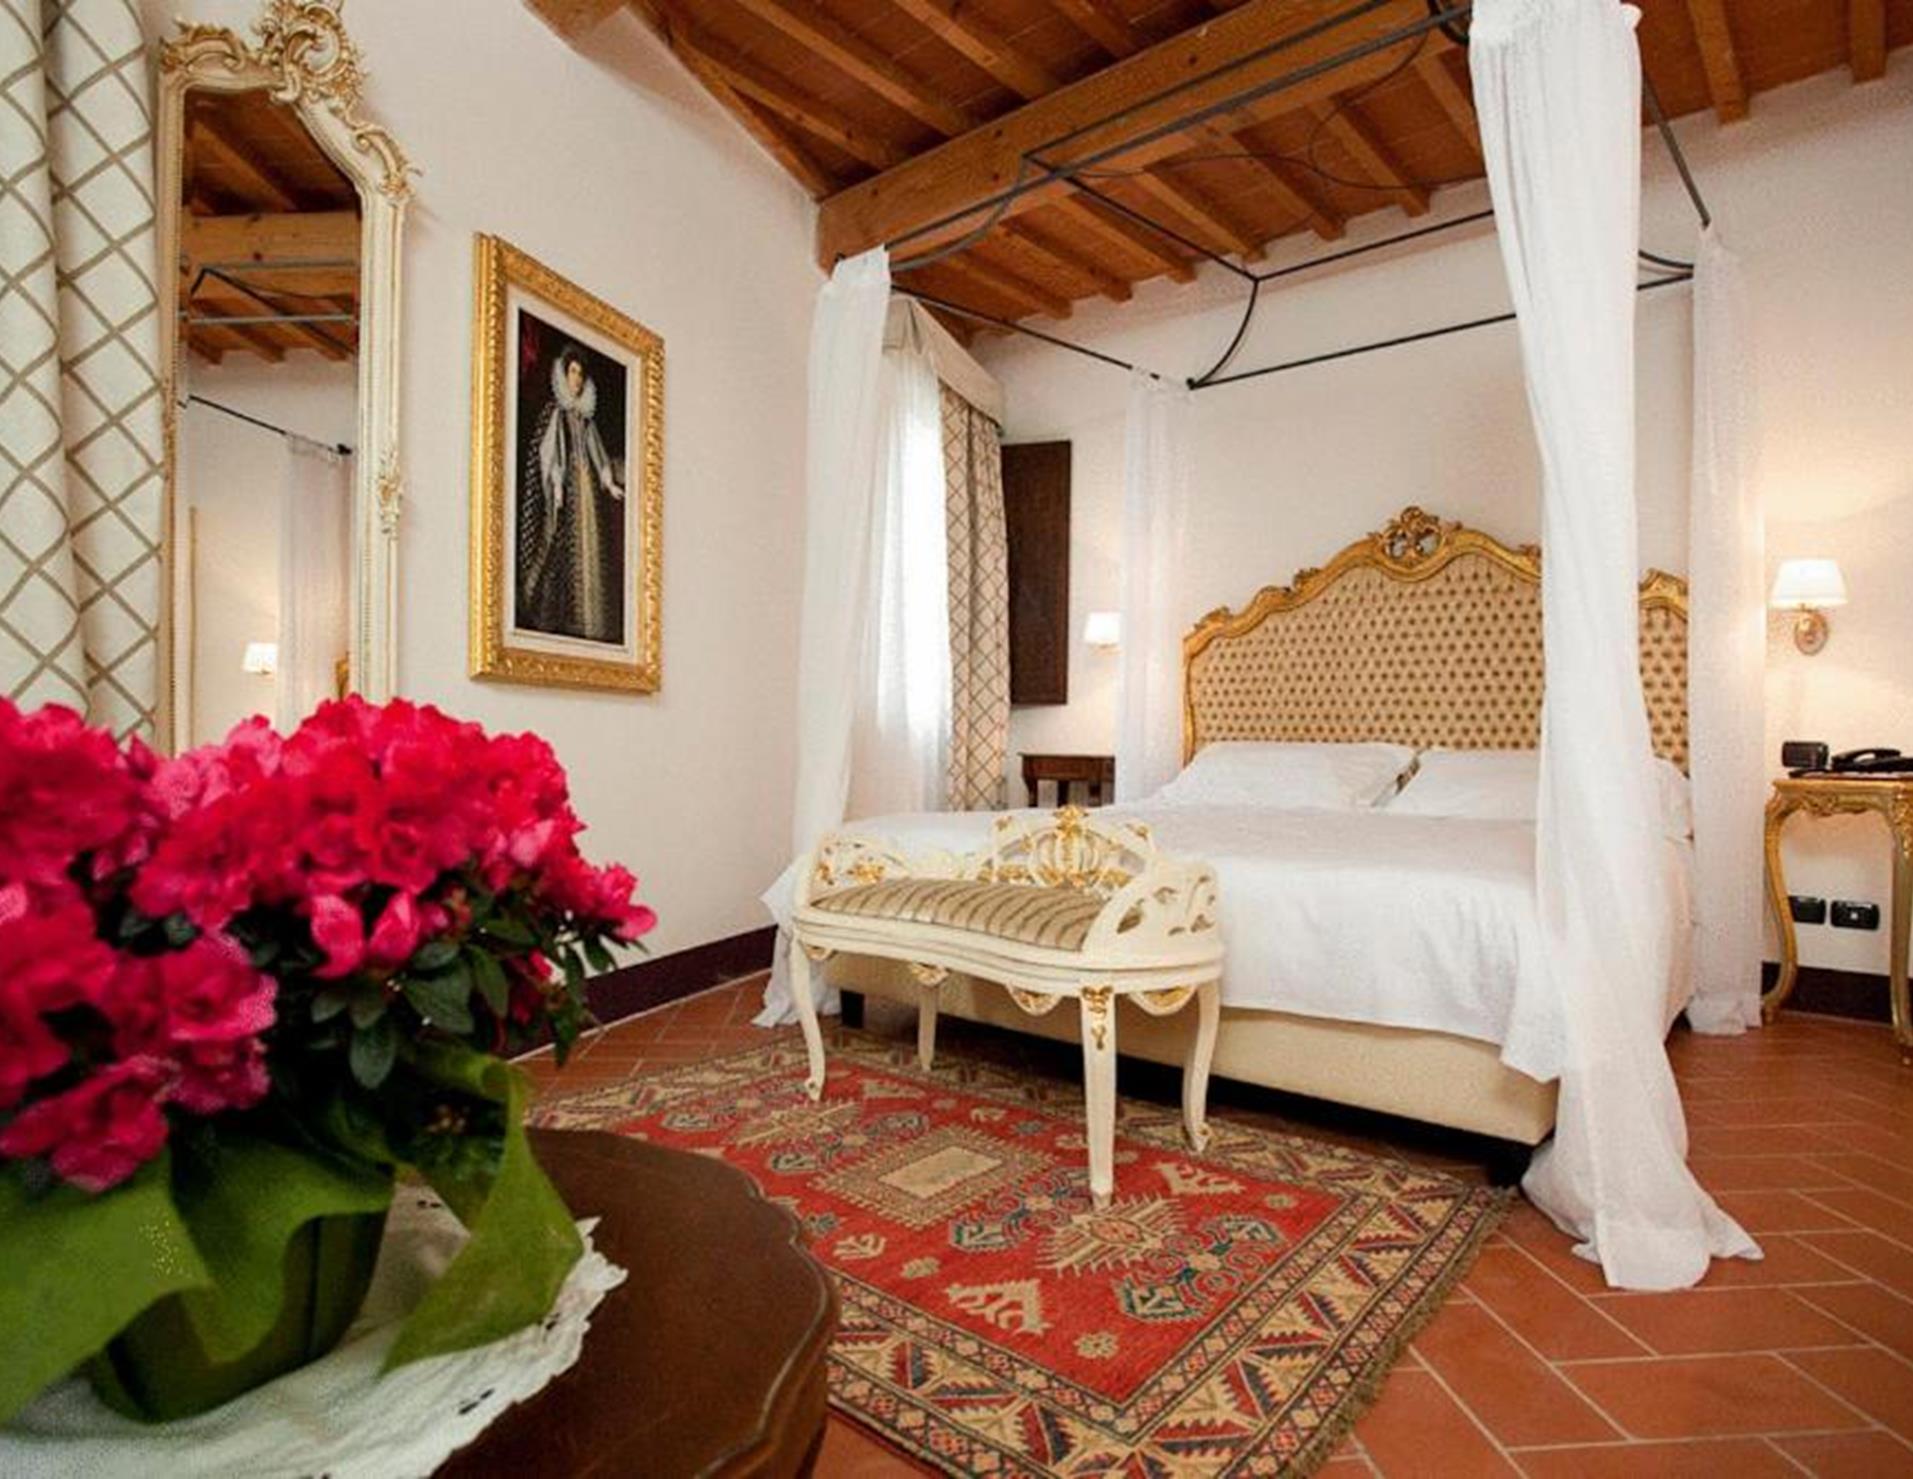 Hotel San Miniato - Room 1